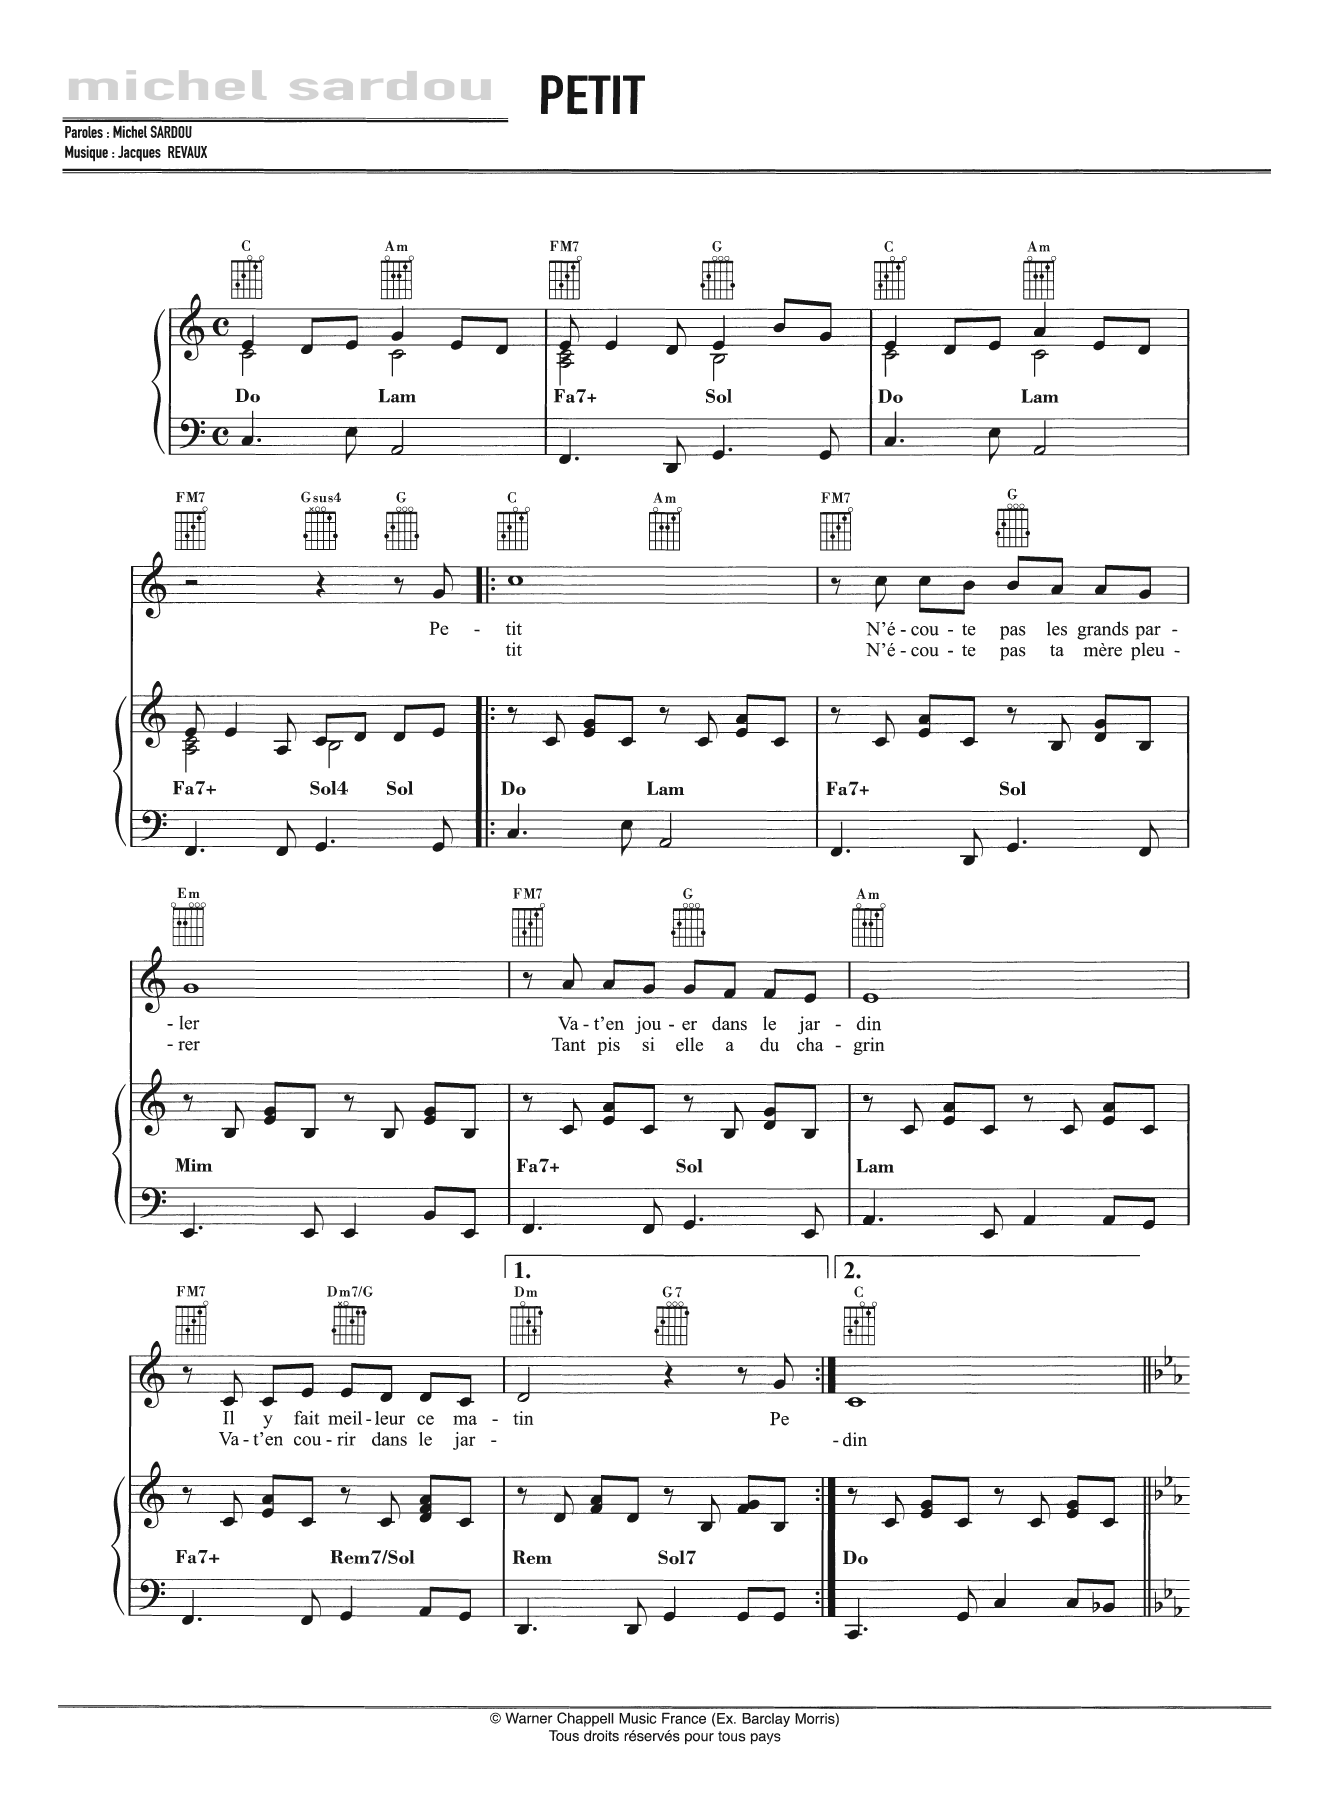 Michel Sardou Petit Sheet Music Notes & Chords for Piano, Vocal & Guitar - Download or Print PDF